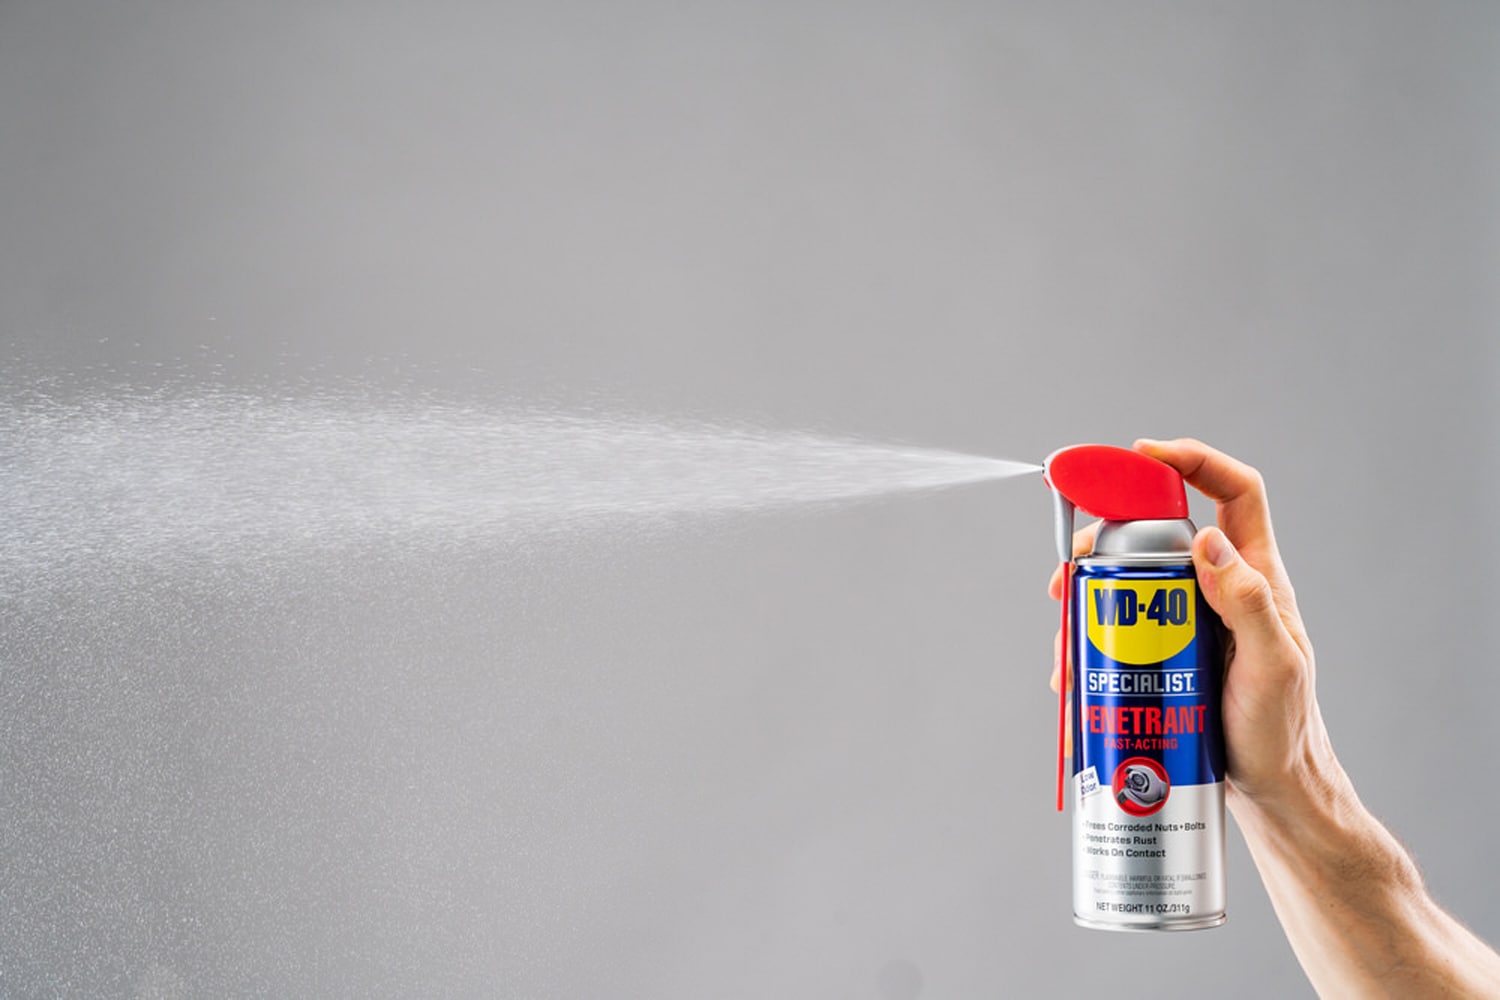 Pidilite WD 40, 500 ml Multipurpose Smart Straw Spray, for Auto Maintenance